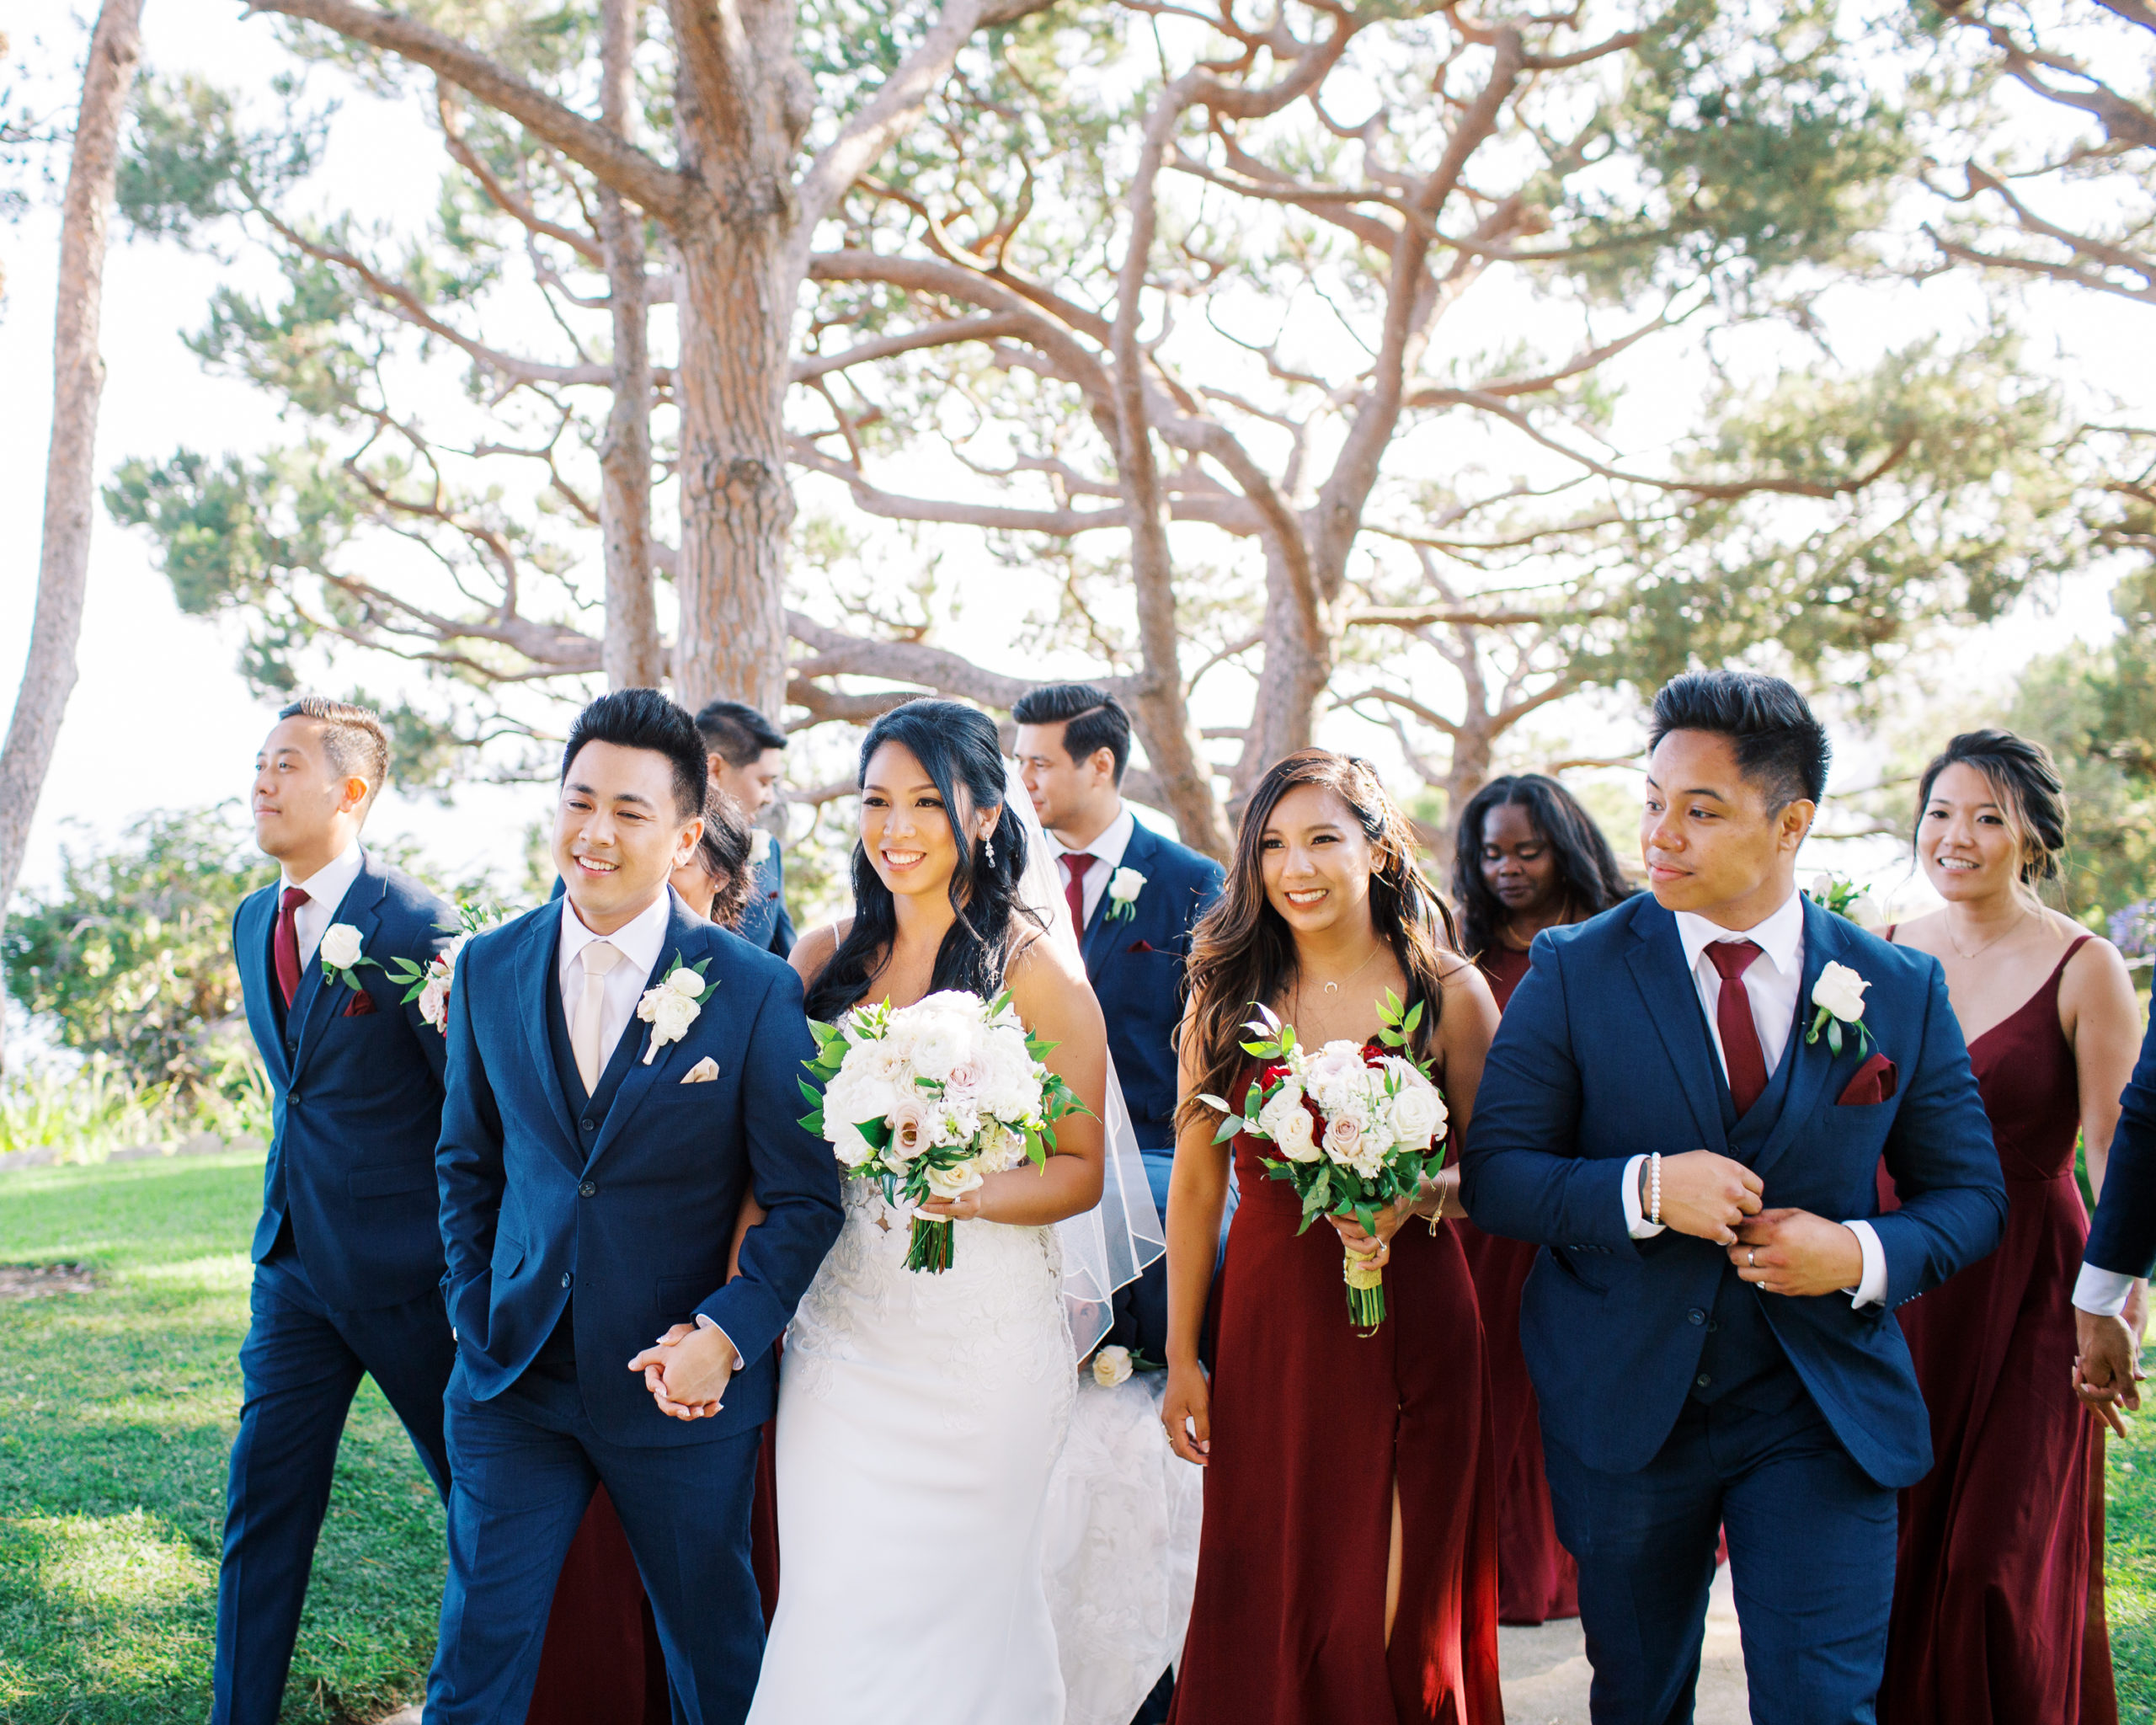 Top Rancho Palos Verdes Wedding Photographer - Wayfarers Chapel Bridal Party Walking